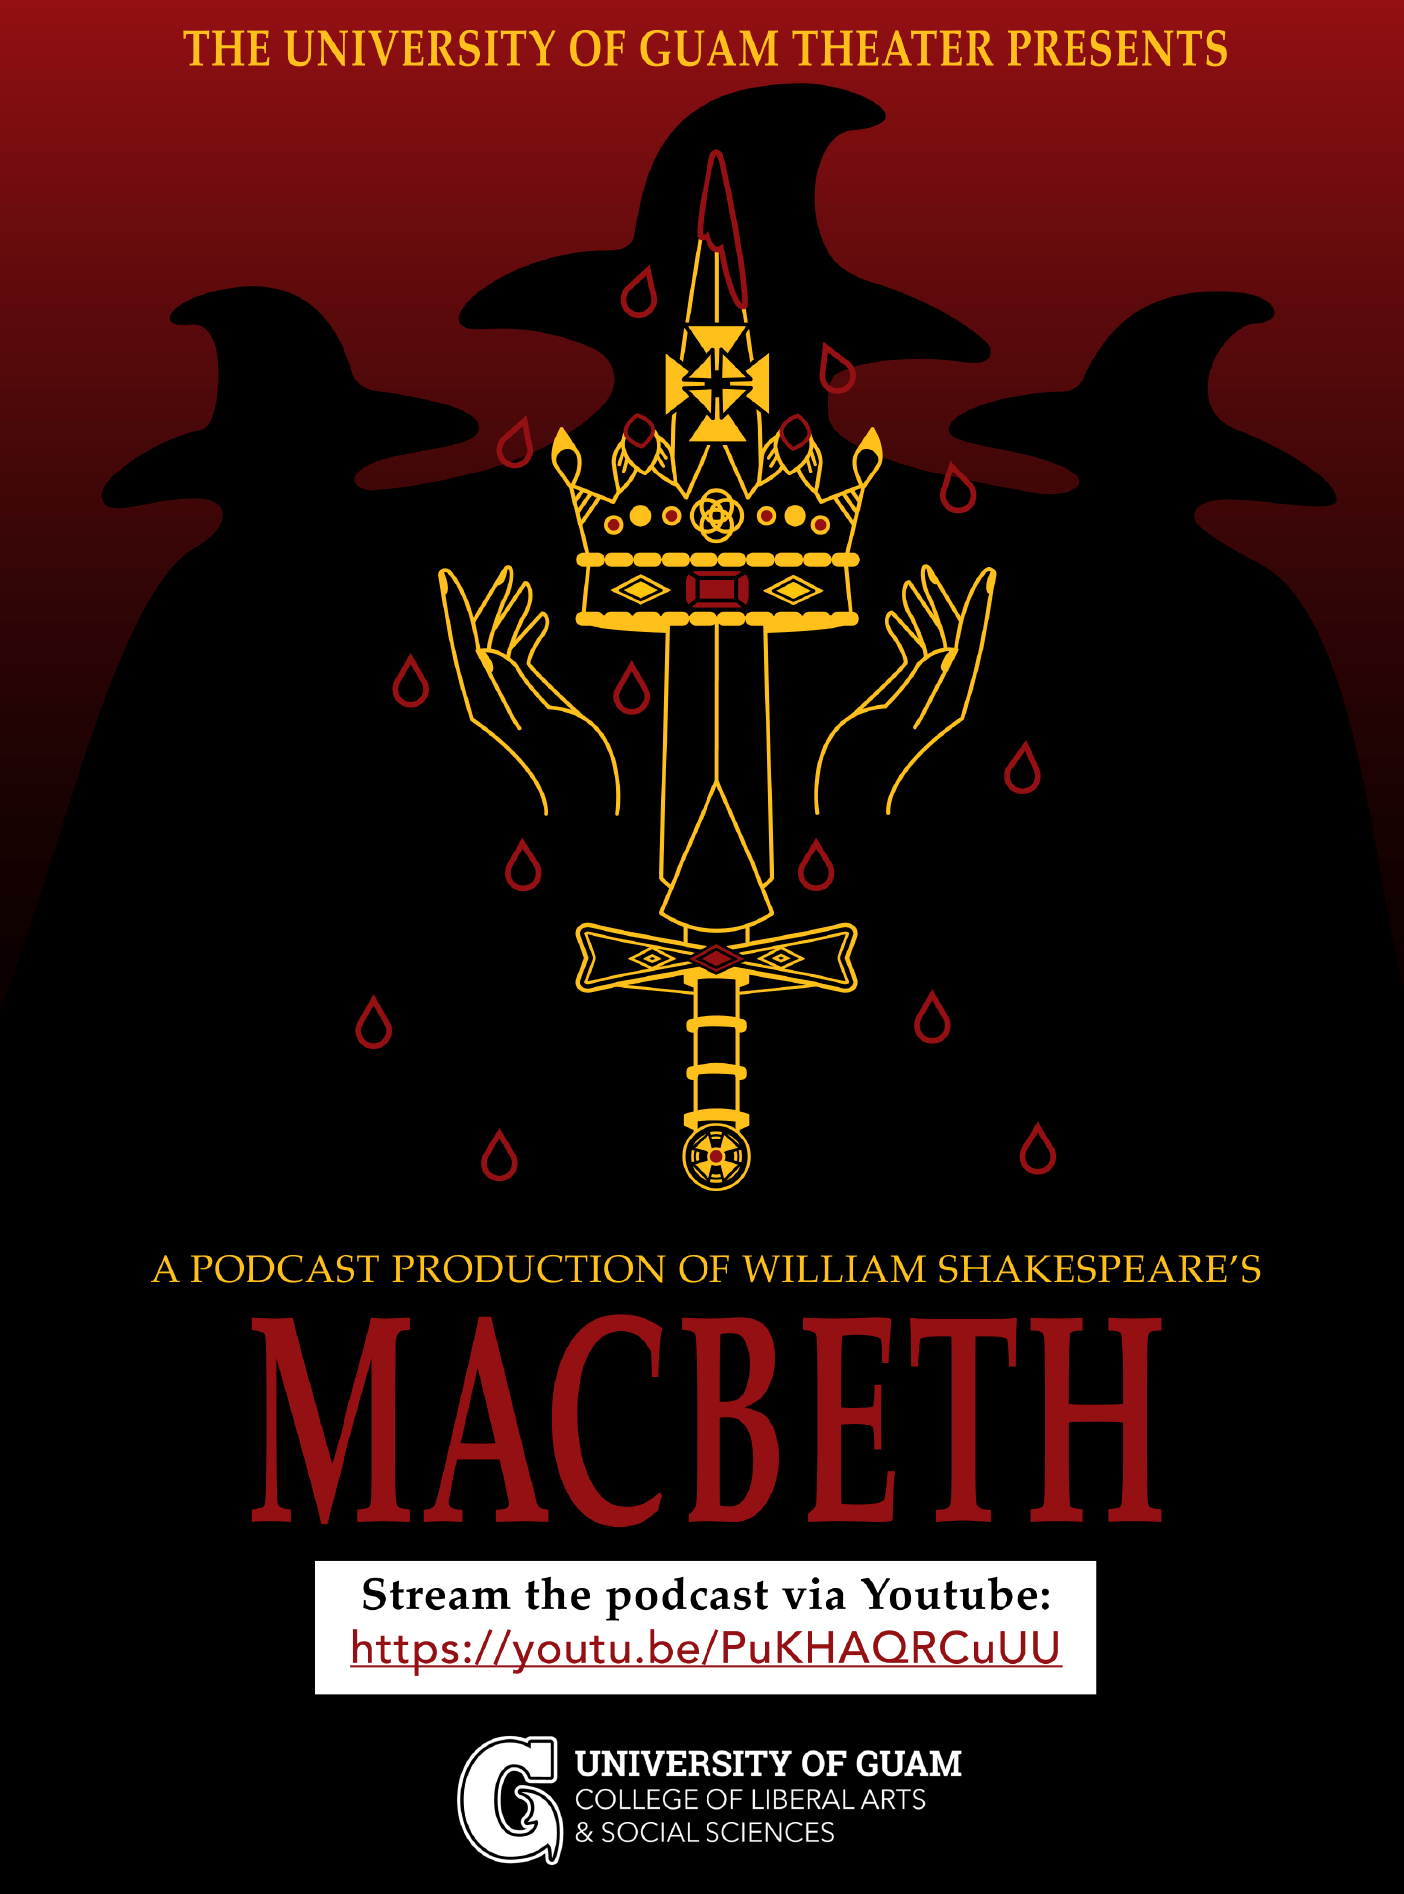 Macbeth Poster Ideas